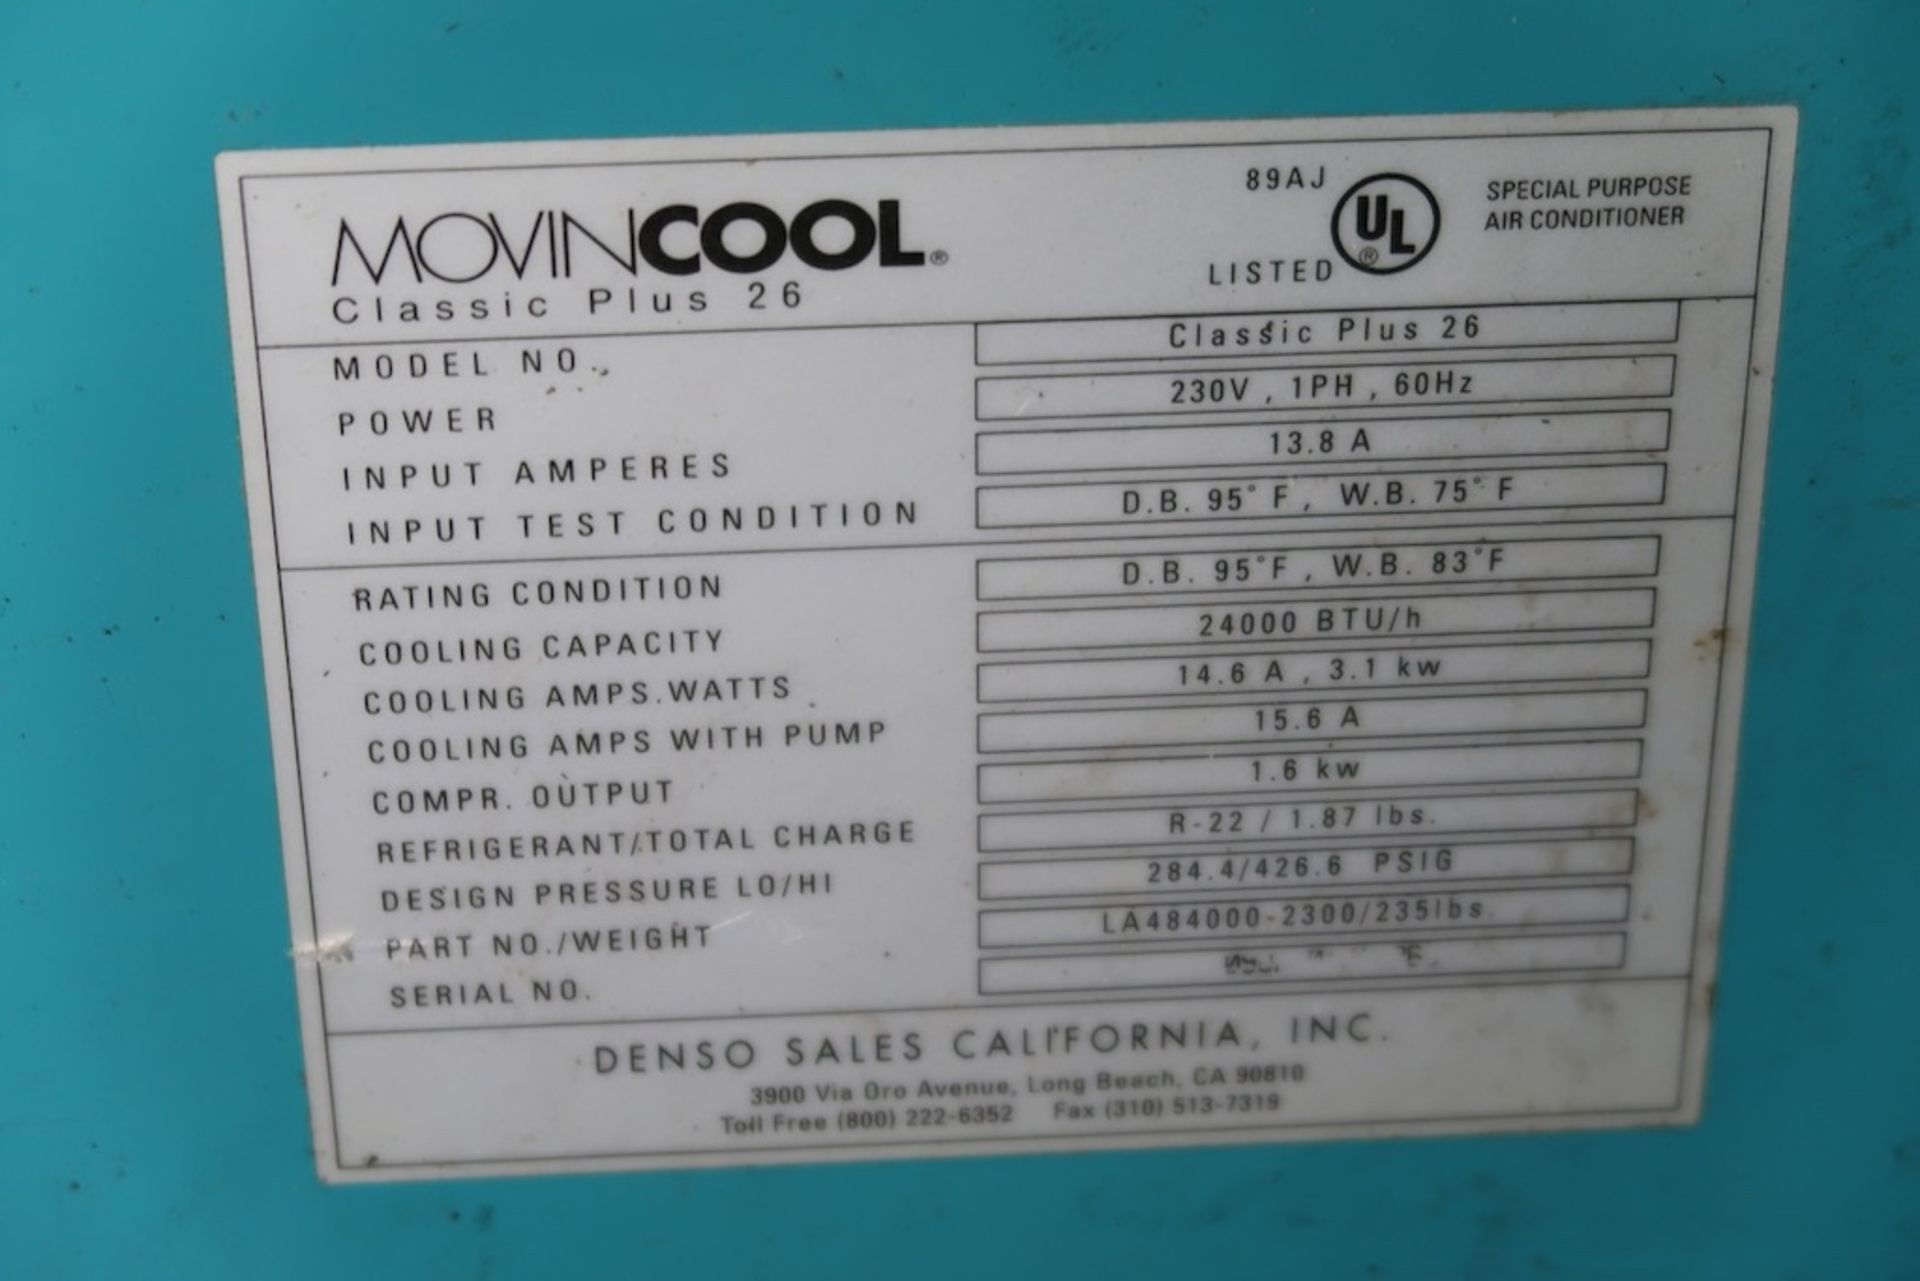 MovinCool Classic Plus 26 Portable Air Conditioner - Image 3 of 3